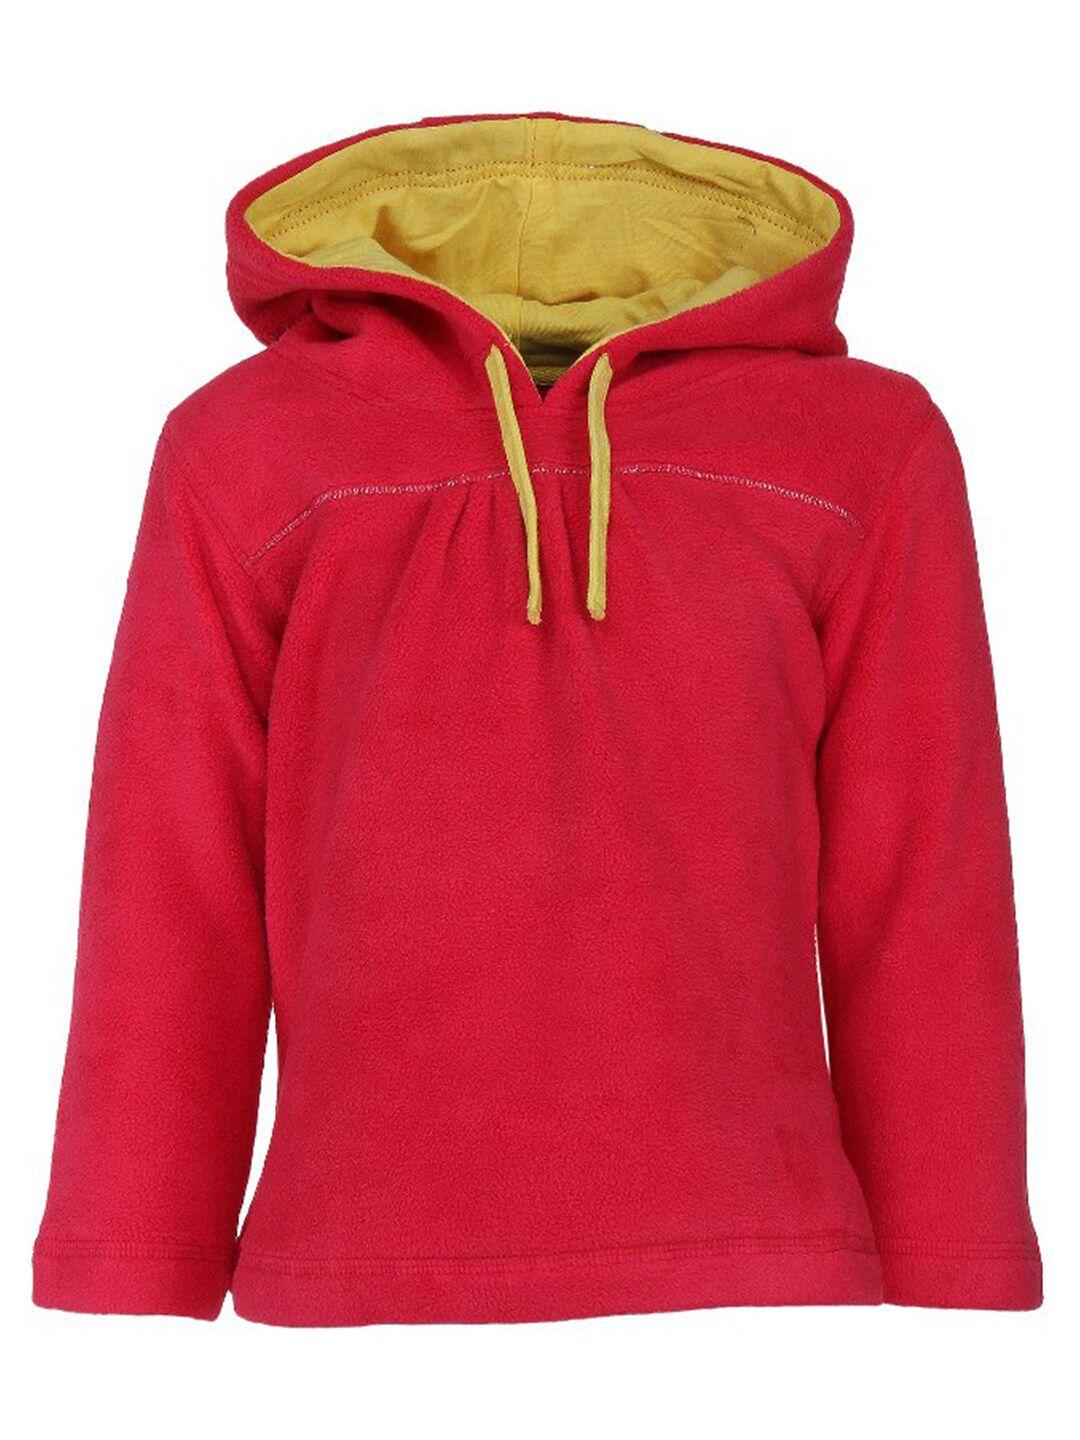 nino bambino unisex kids solid hooded cotton sweatshirt